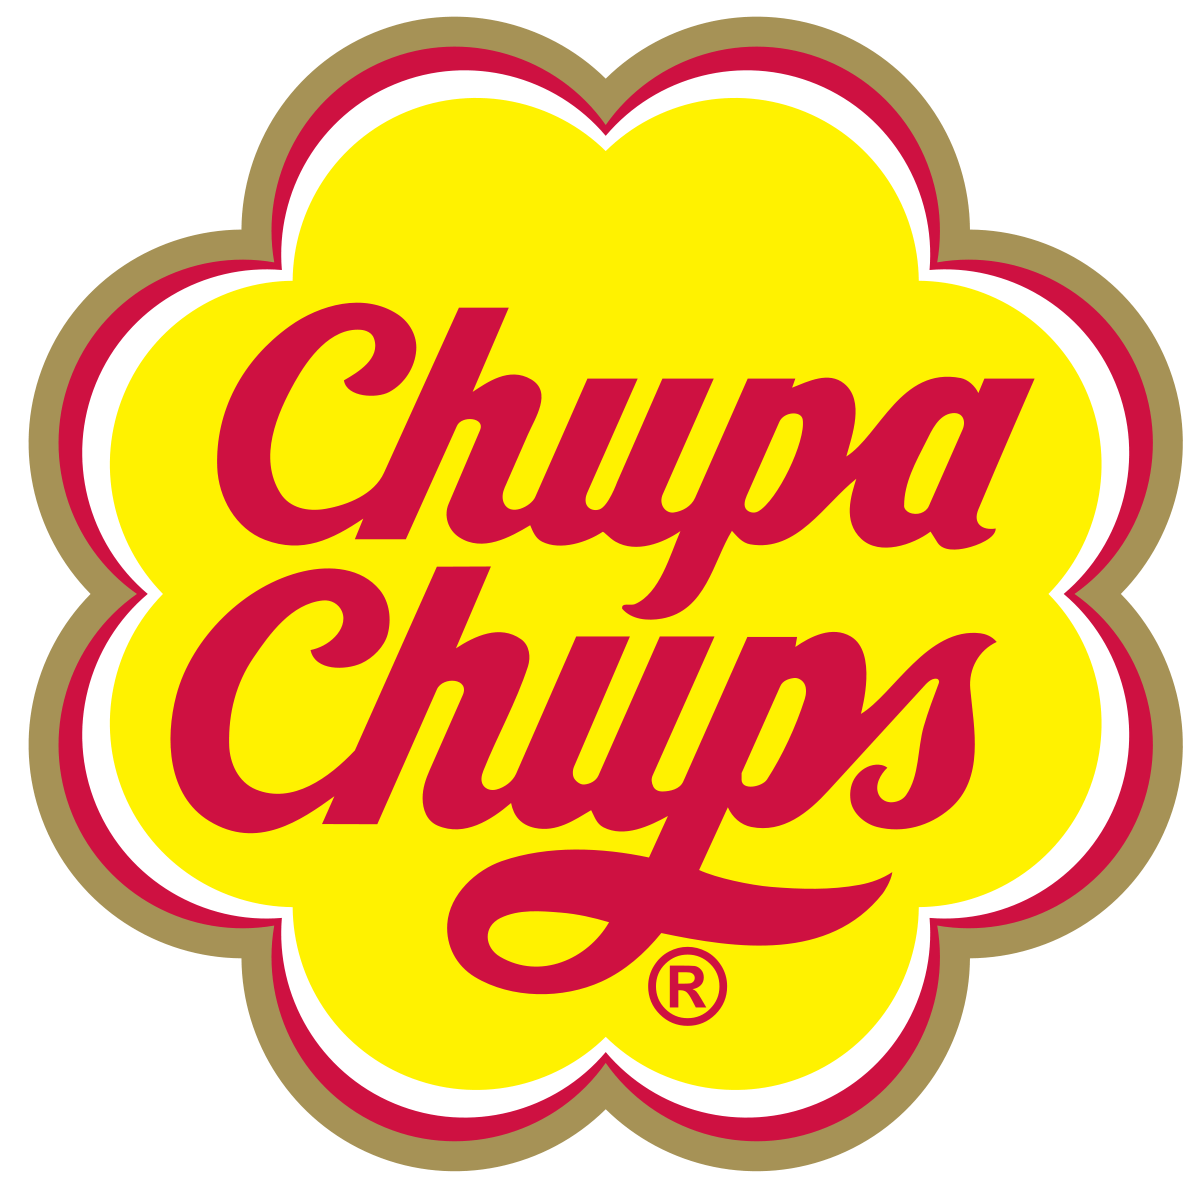 American Candy Companies Logo - Chupa Chups